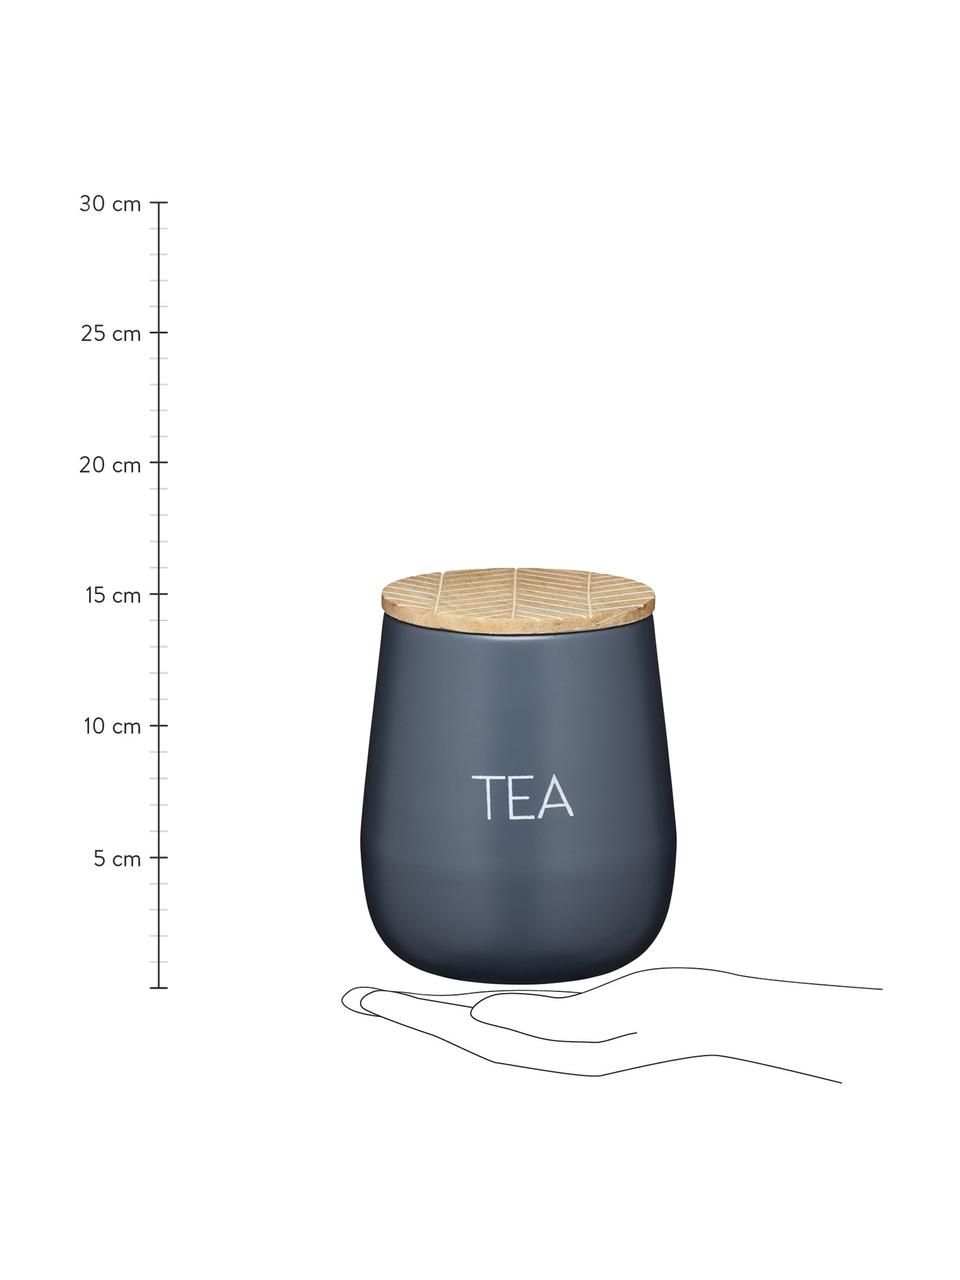 Aufbewahrungsdose Serenity Tea, Ø 13 x H 15 cm, Dose: Stahl, beschichtet, Deckel: Mangoholz, Anthrazit, Holz, Ø 13 x H 15 cm, 1,6 L